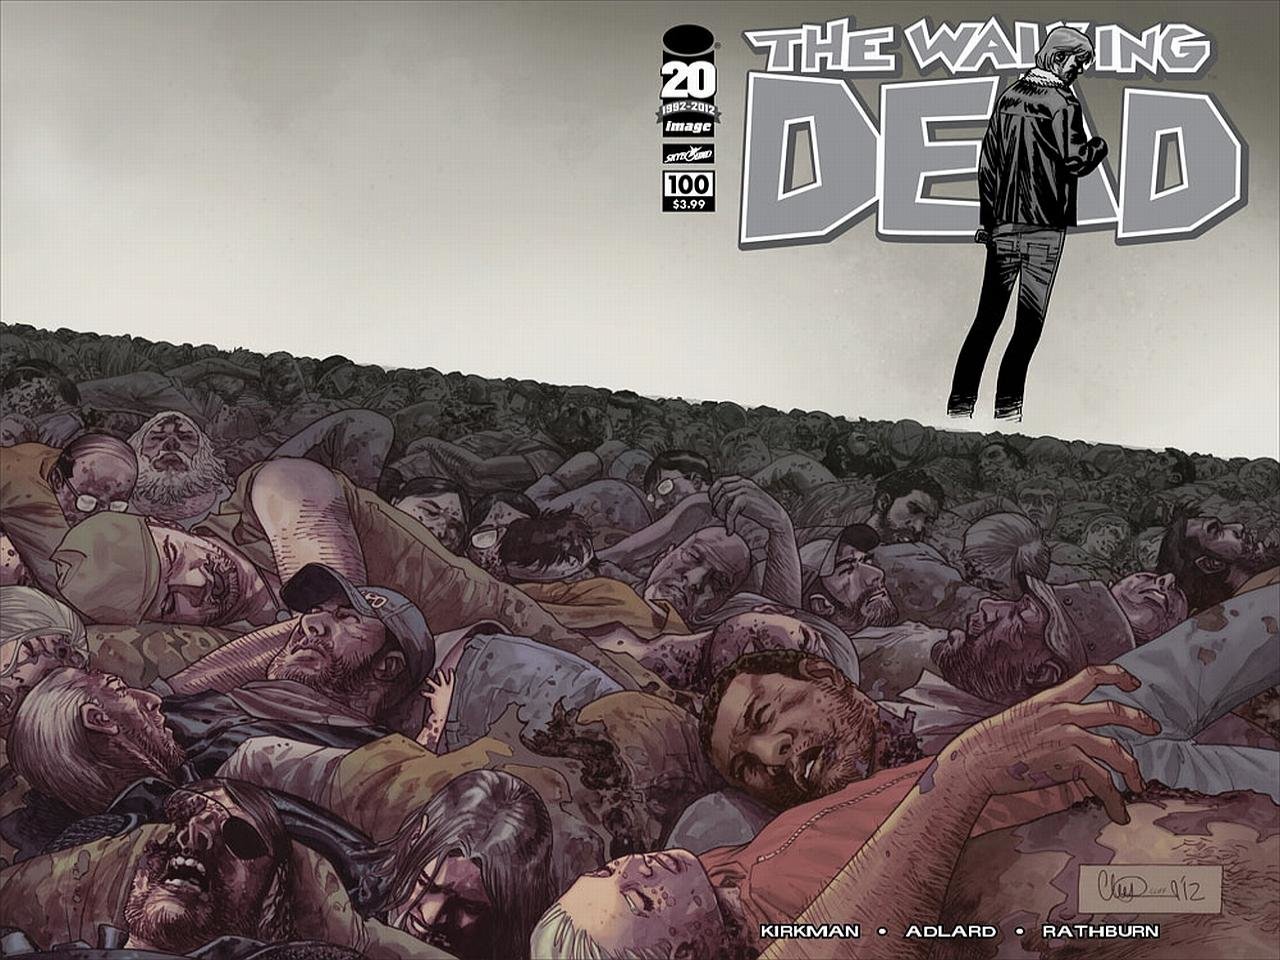 Best Walking Dead Comics wallpaper ID:84443 for High Resolution hd 1280x960 PC